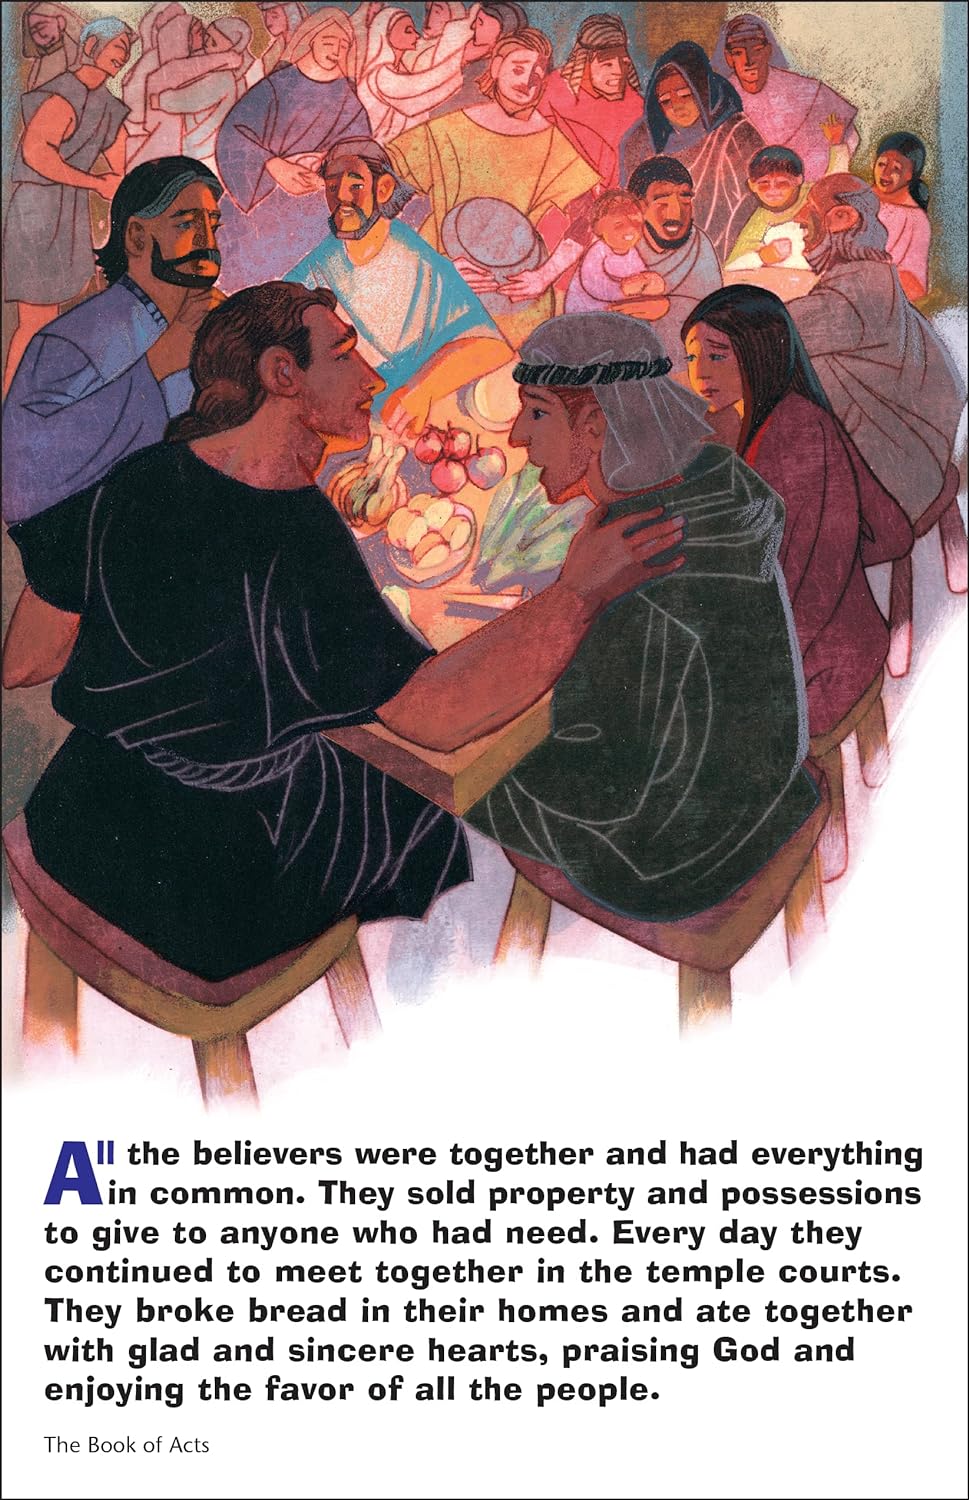 NIV, Children's Holy Bible, Color Illustrated Soft Cover | English bible for children | English bible